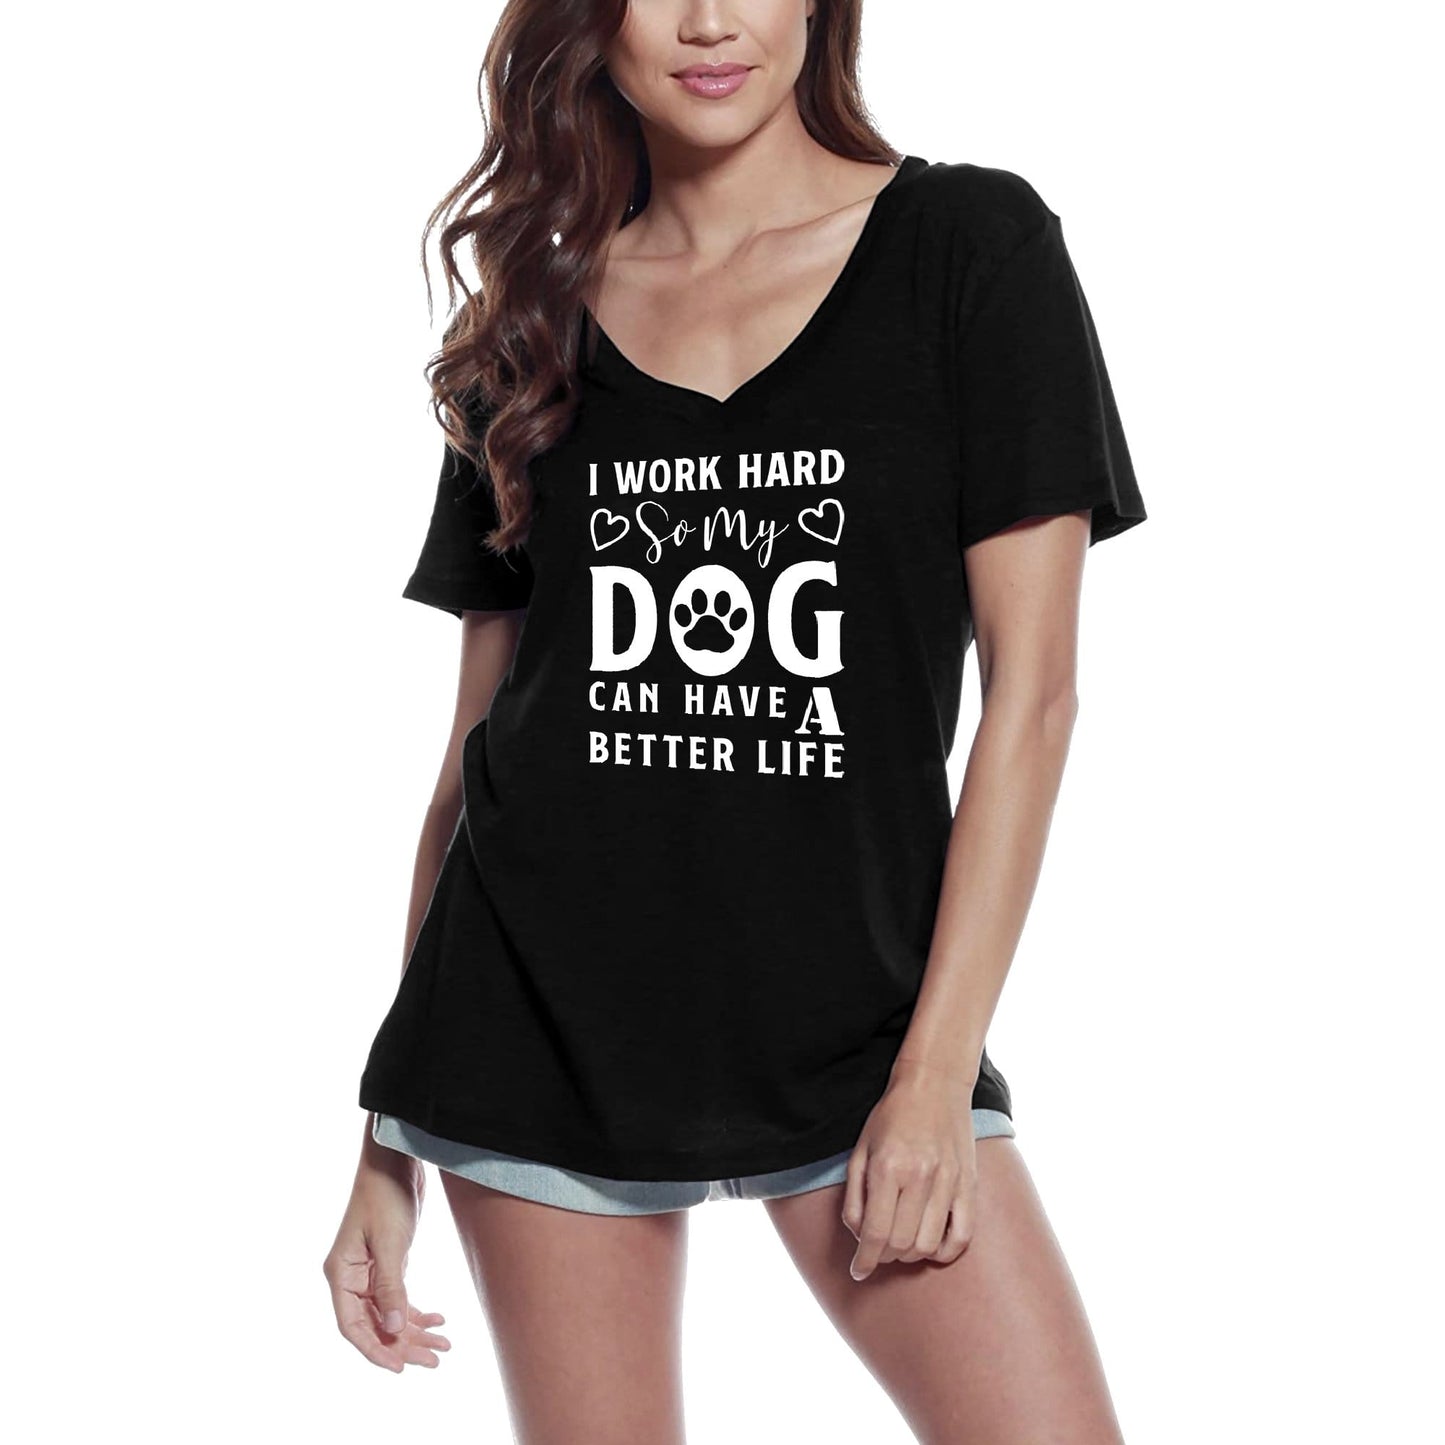 ULTRABASIC Women's T-Shirt I Work Hard So My Dog Can Have a Better Life - Short Sleeve Tee Shirt Tops